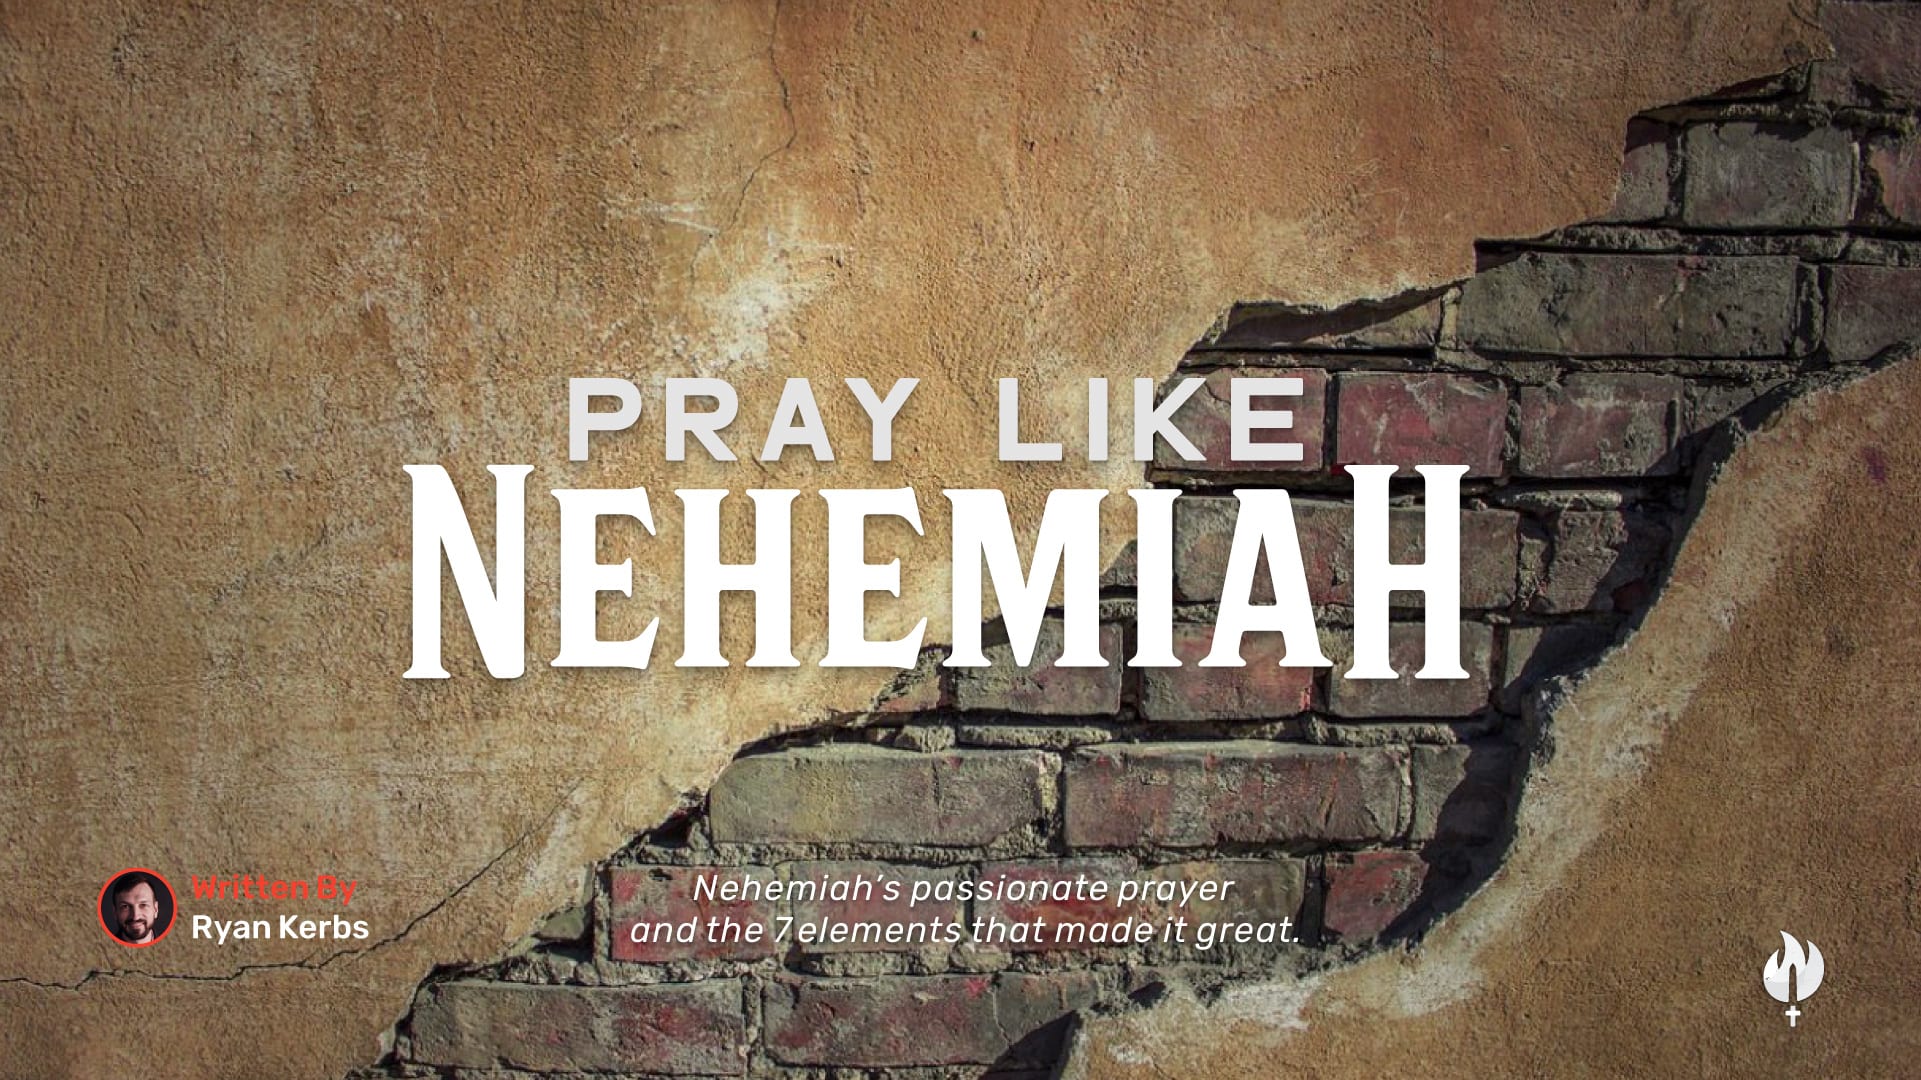 Pray Like Nehemiah. Nehemiah’s passionate prayer and the 7 elements that made it great.